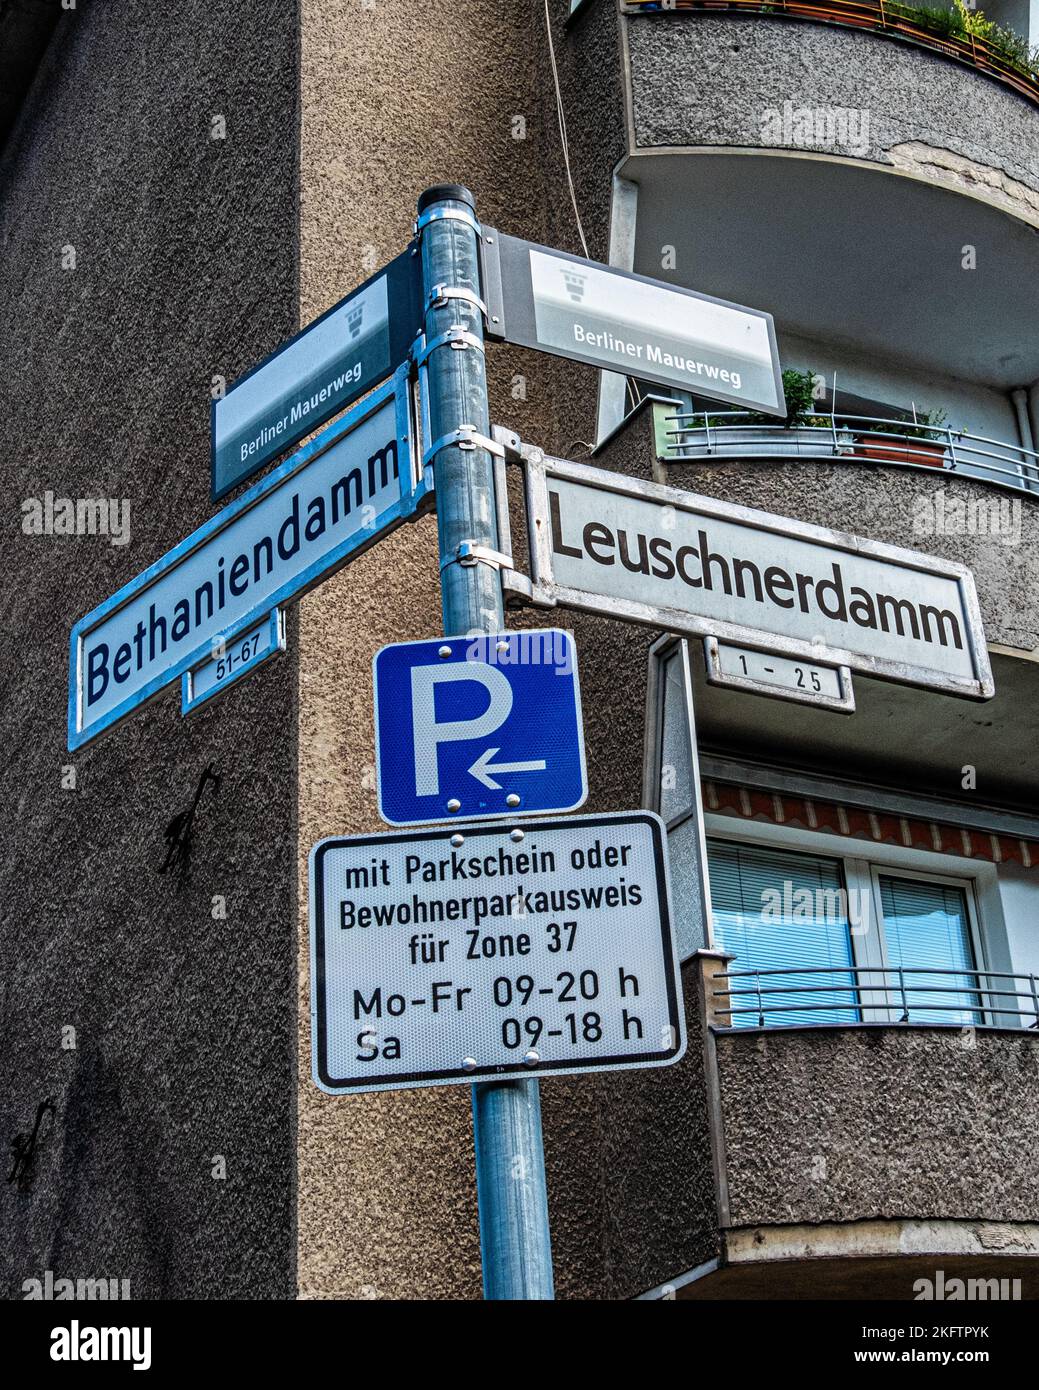 Berliner Mauerweg Signo en la ruta del antiguo muro de Berlín, CNR Bethaniendamm & Leuschnerdamm, Mitte, berlín Foto de stock